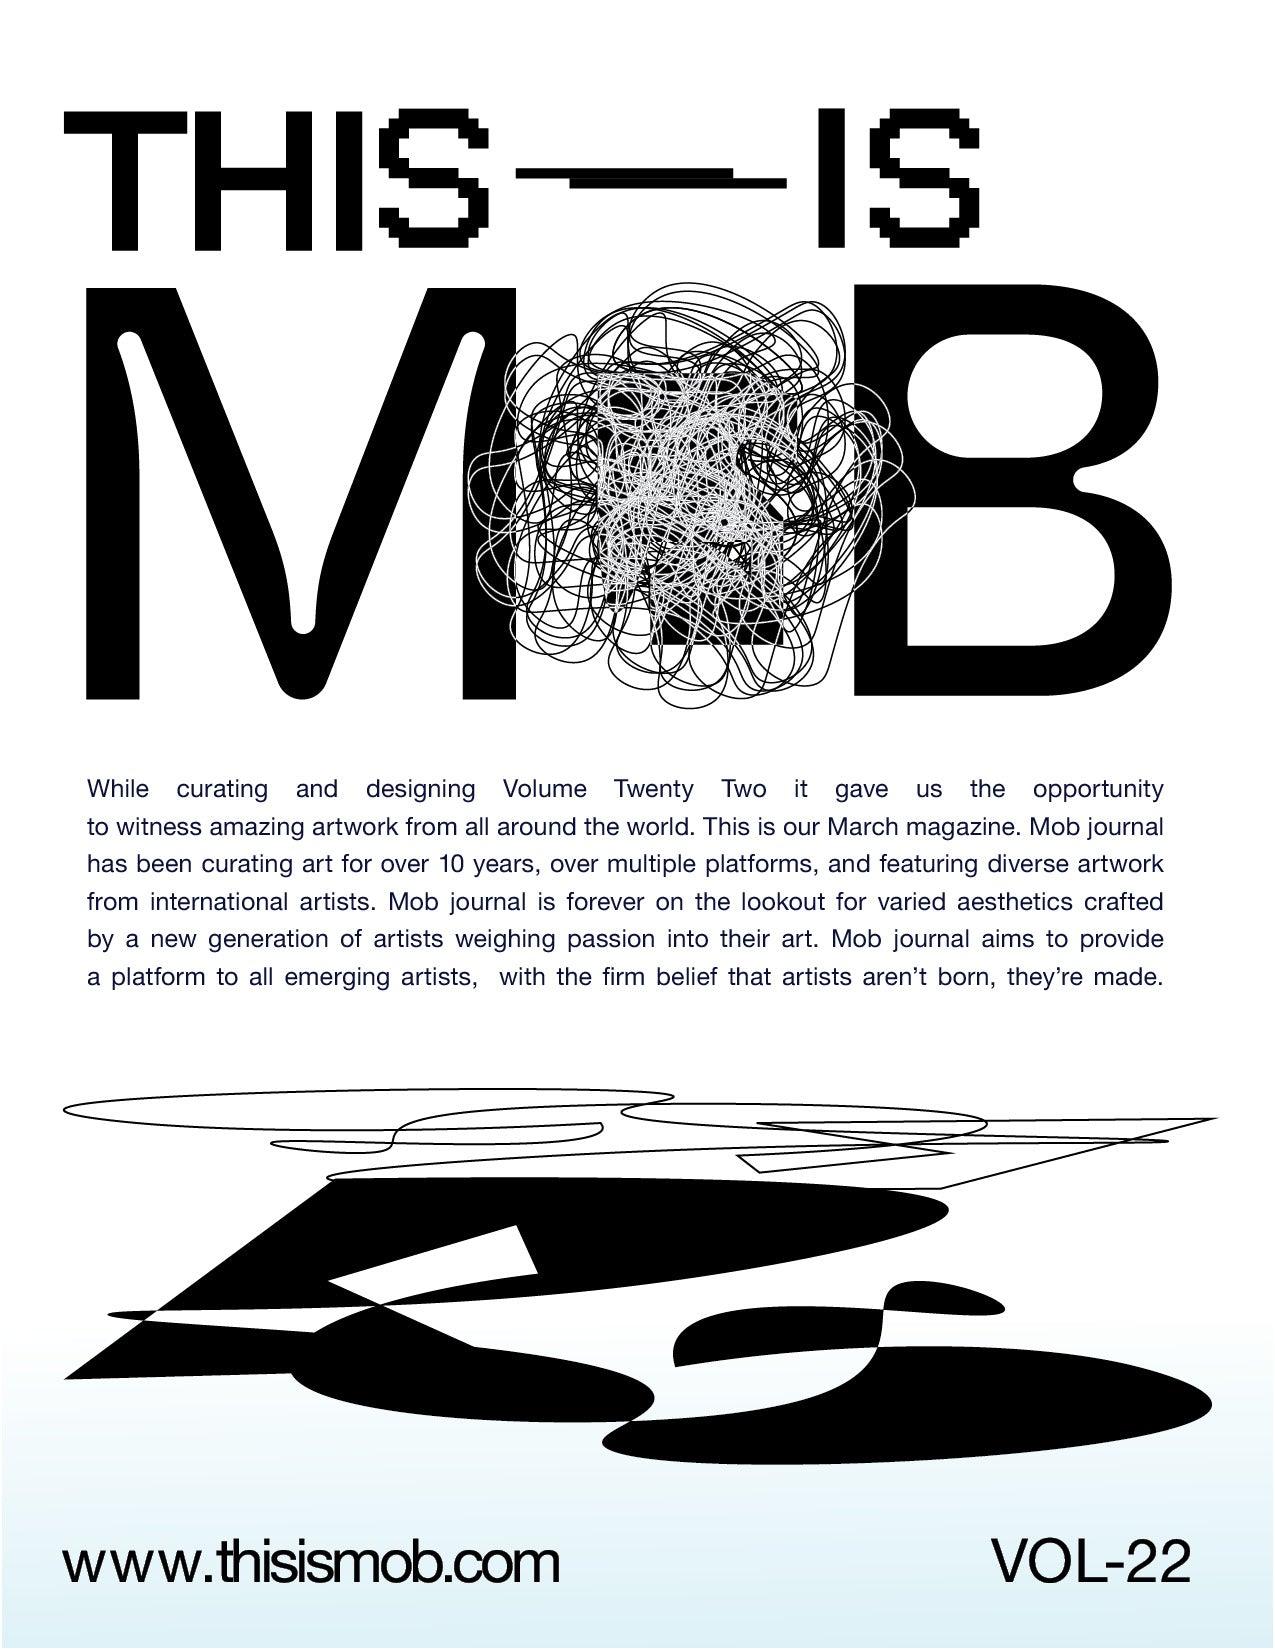 MOB JOURNAL | VOLUME TWENTY TWO | ISSUE #38 - Mob Journal